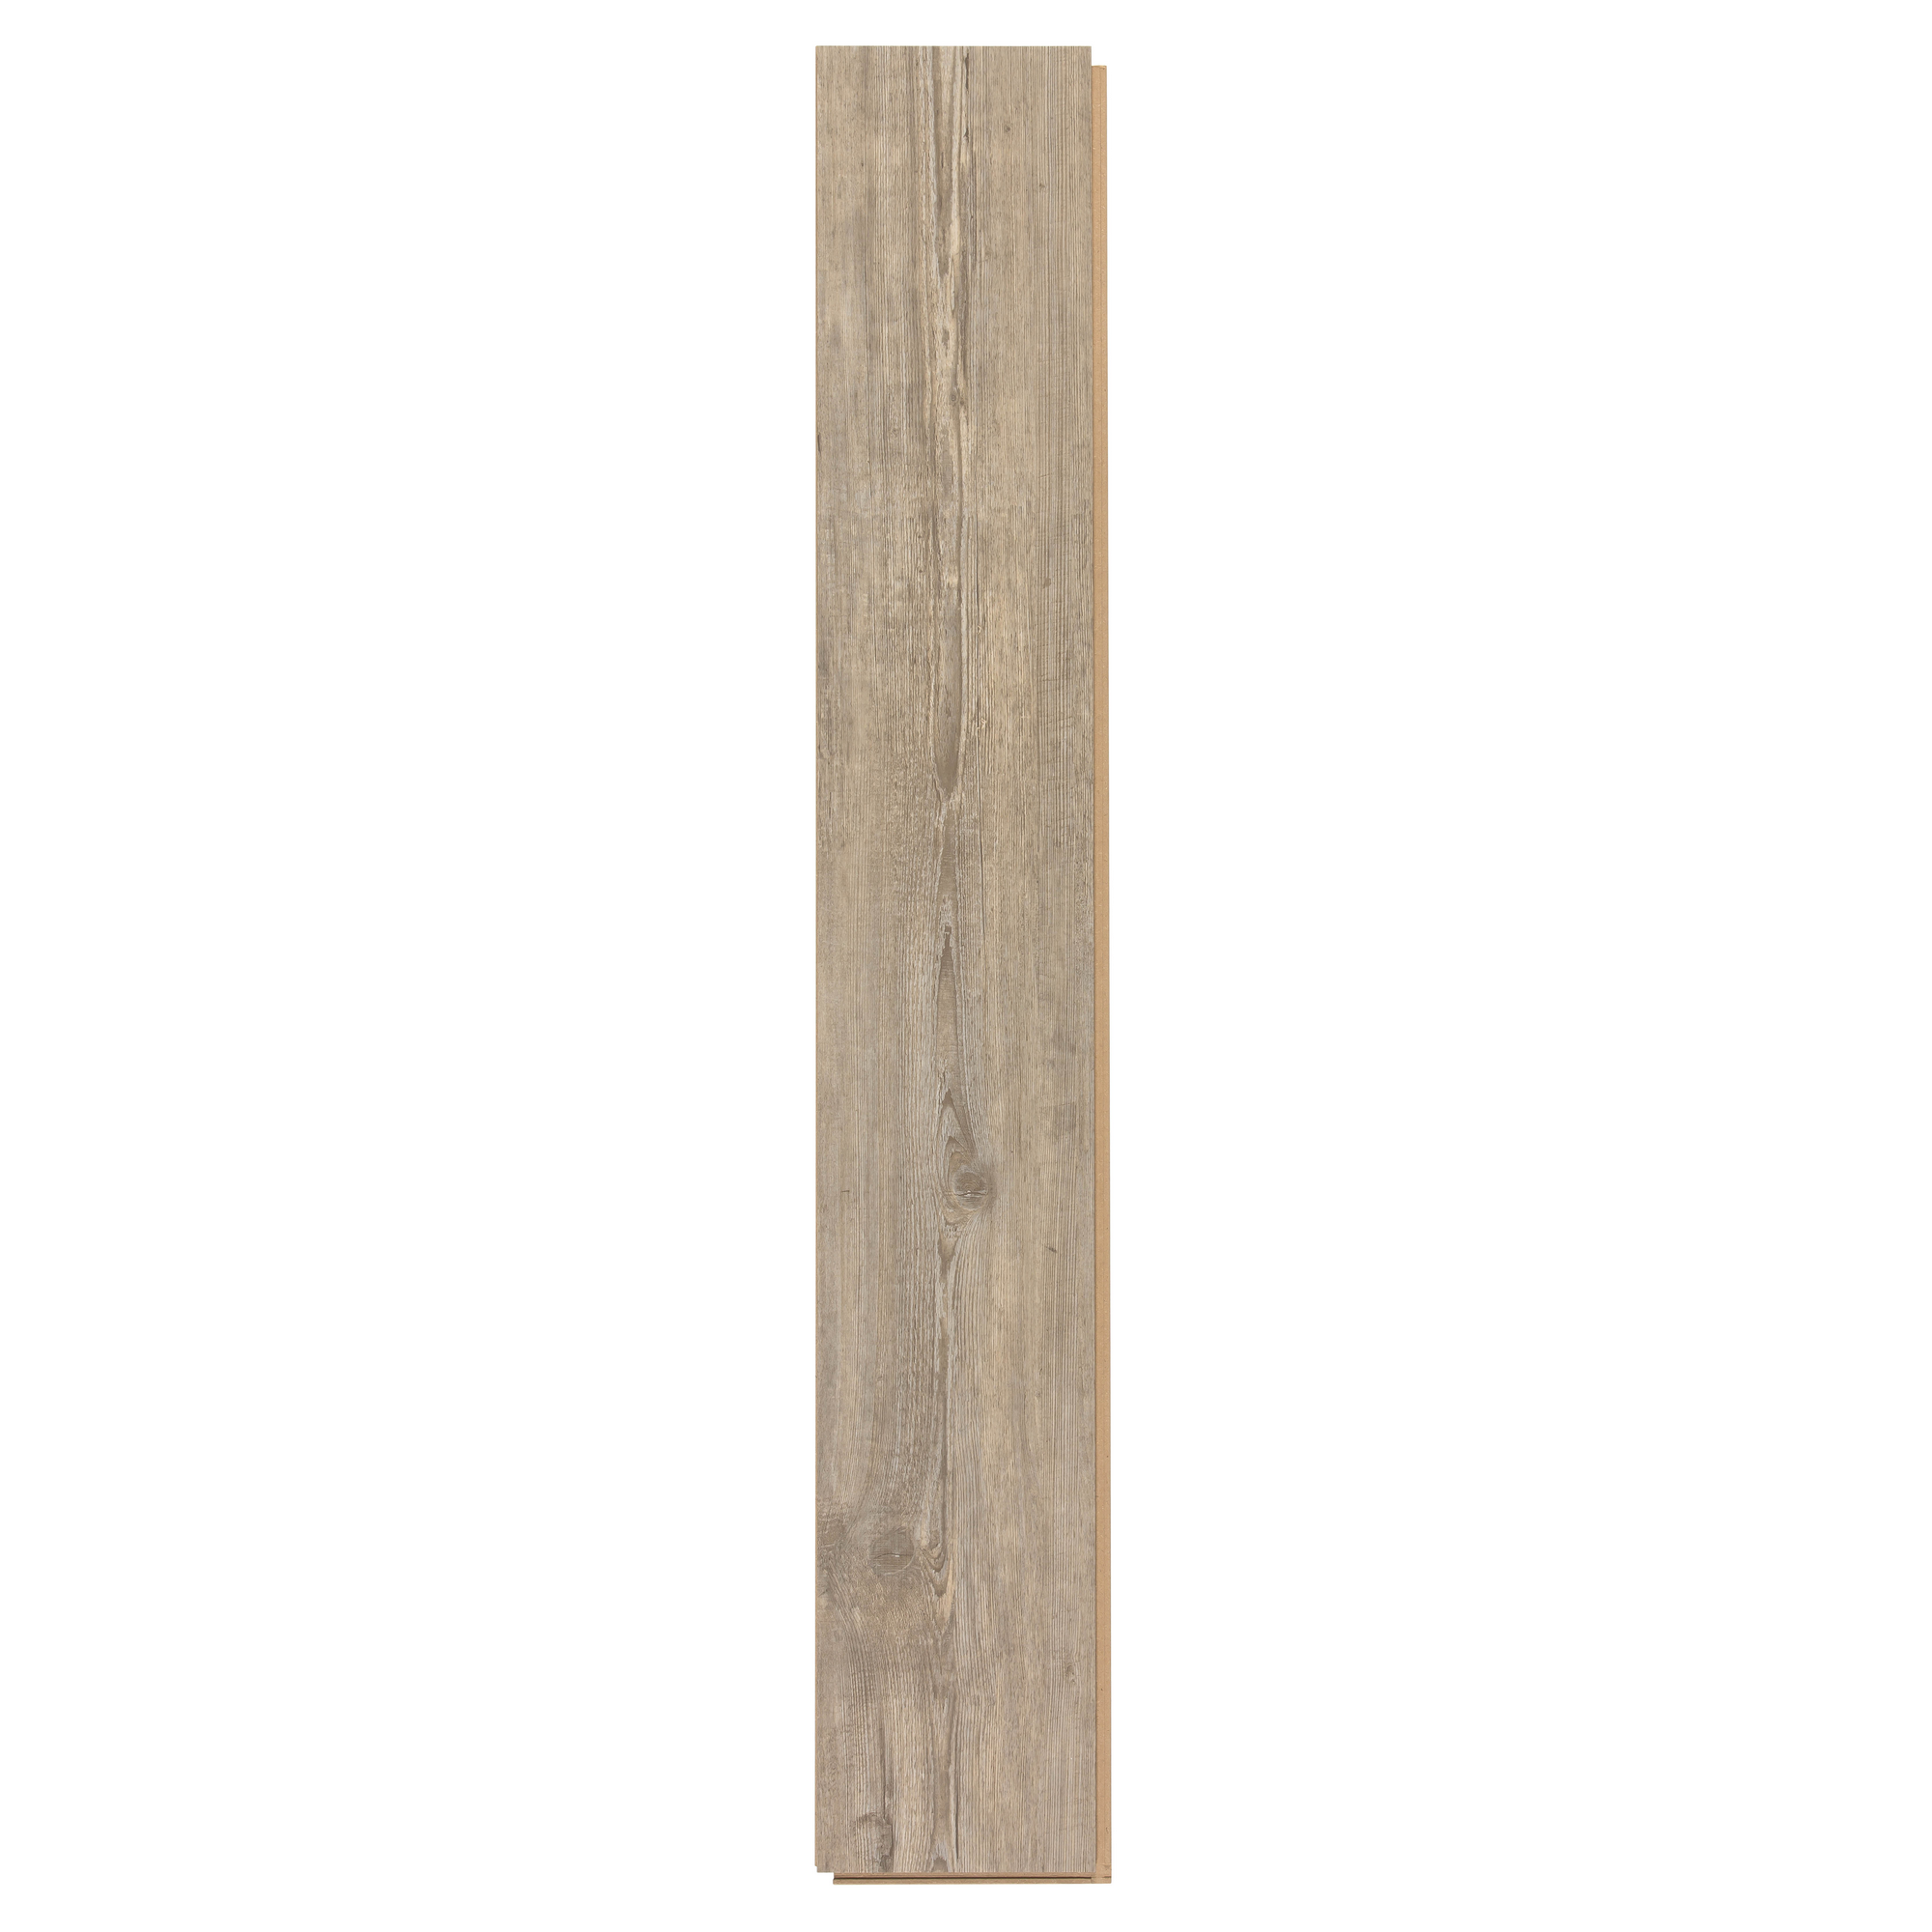 Vinylboden 'Comfort' Winter Pine graubraun 10,5 mm + product picture